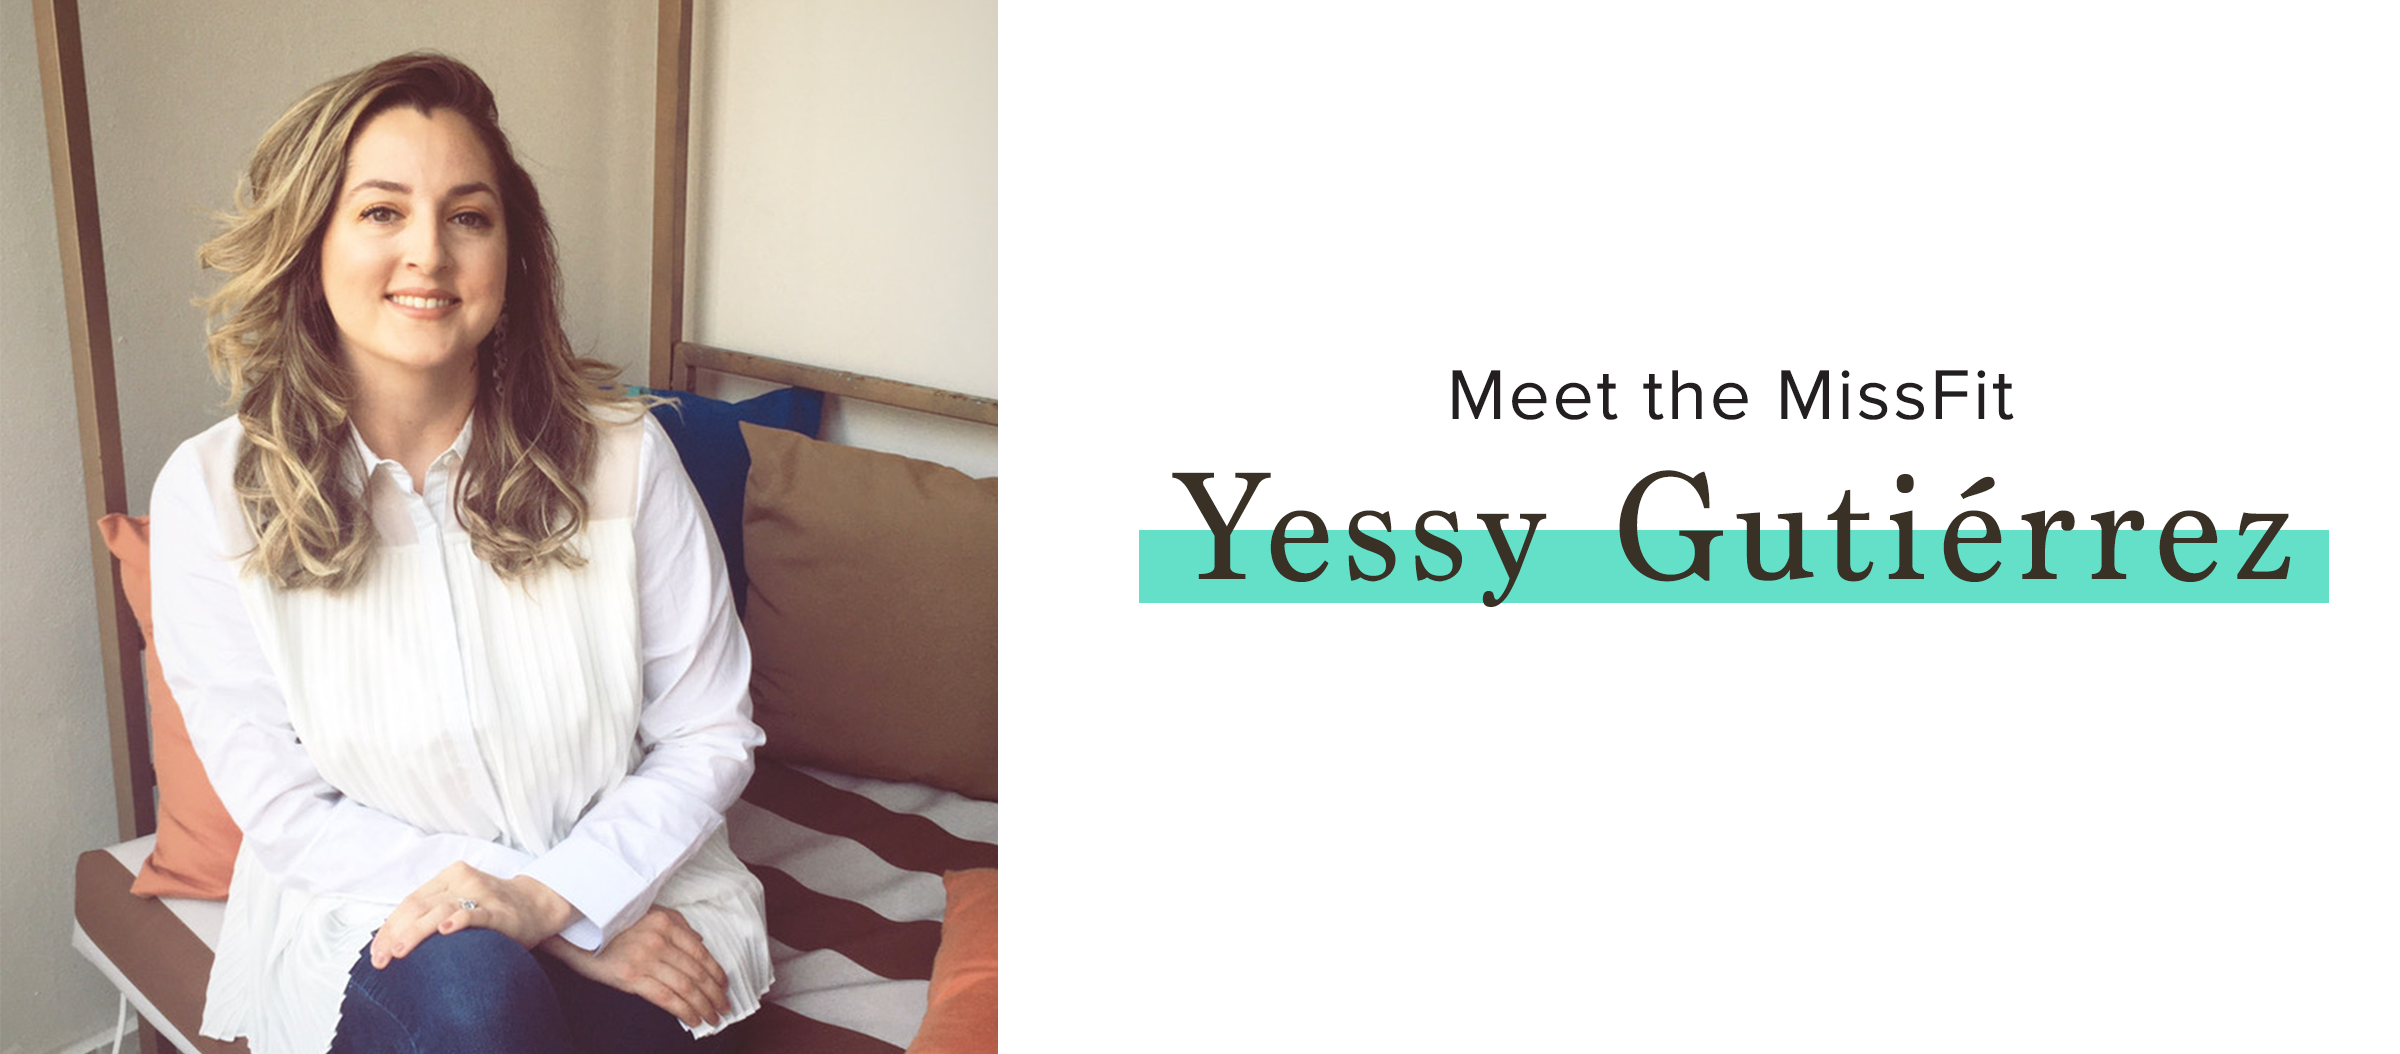 Meet the MissFit, Yessy Gutierrez